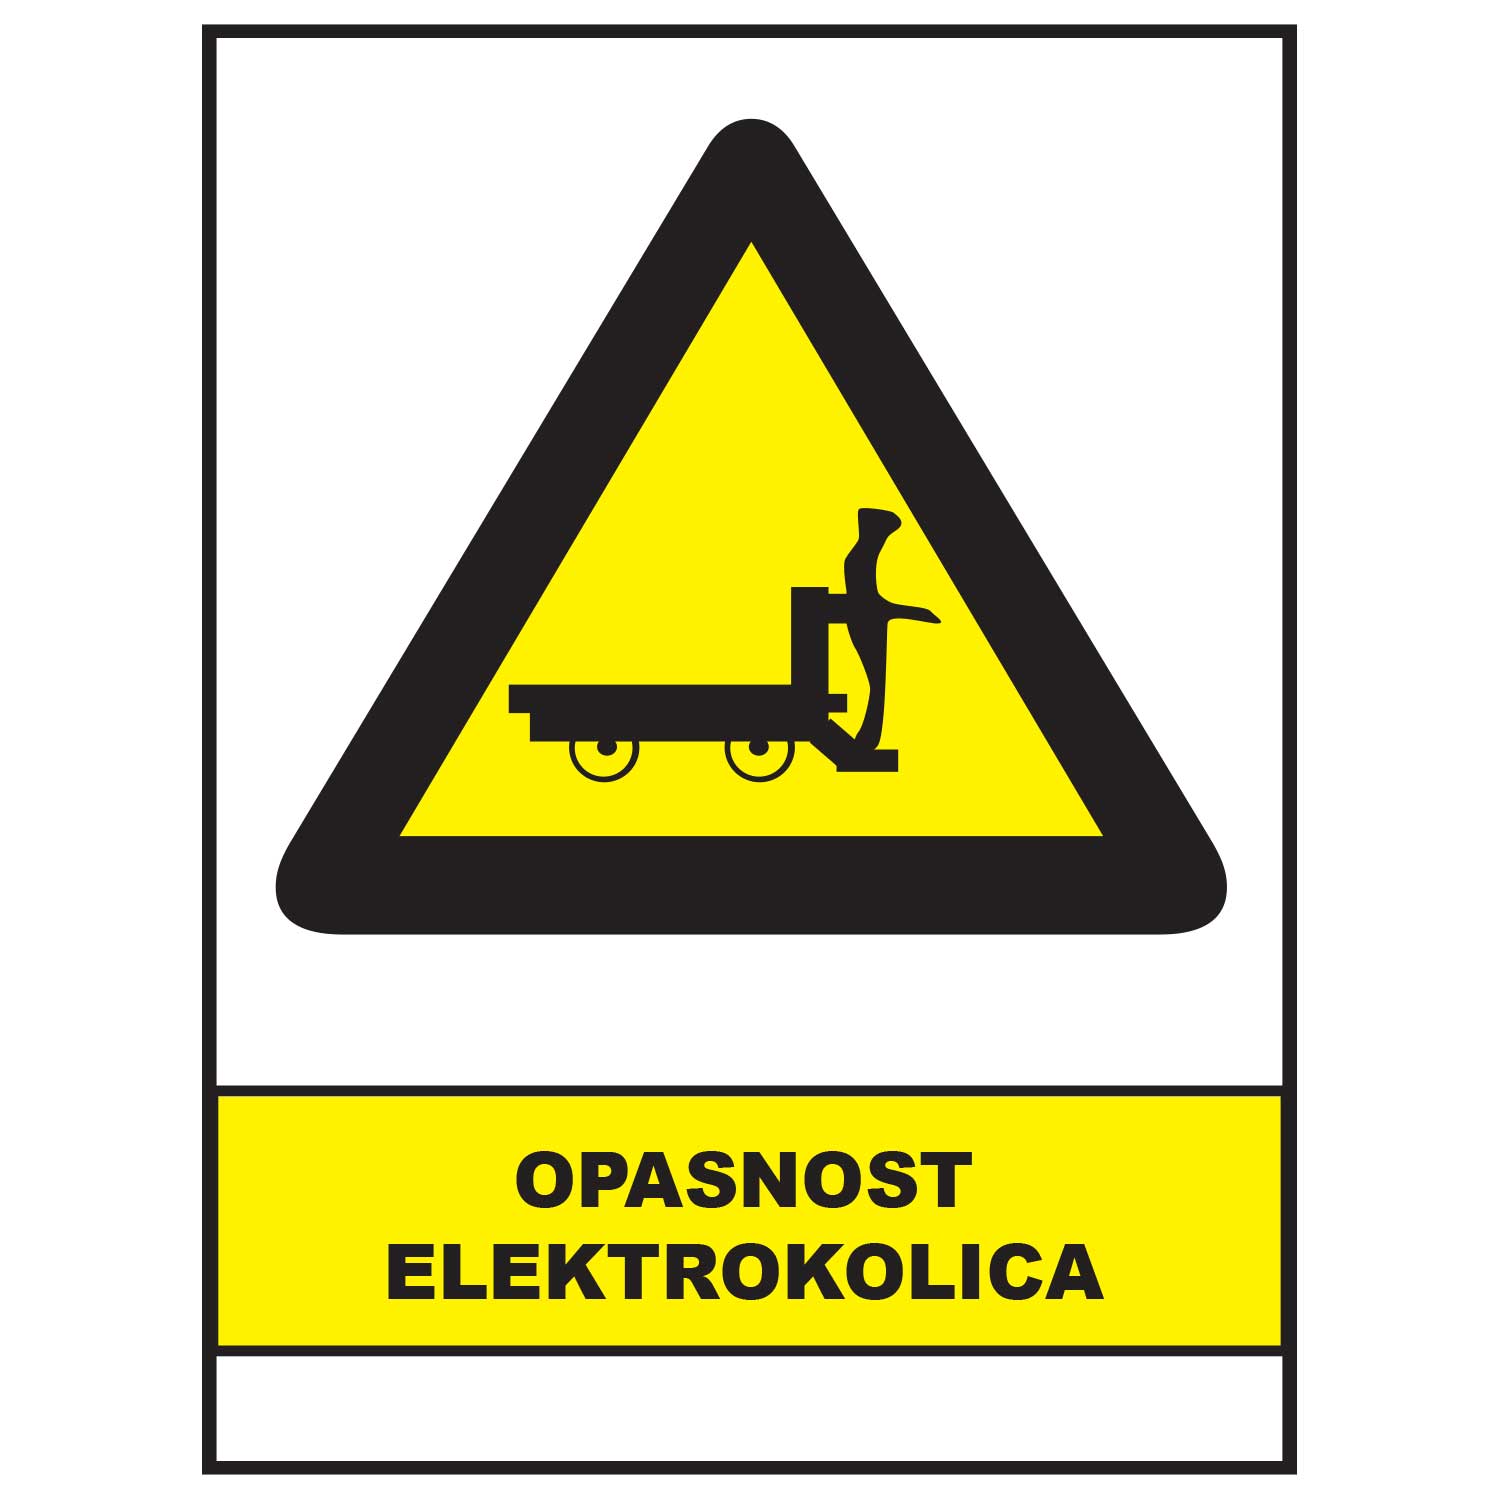 Opasnost elektrokolica, znakovi opasnosti, ZP3021